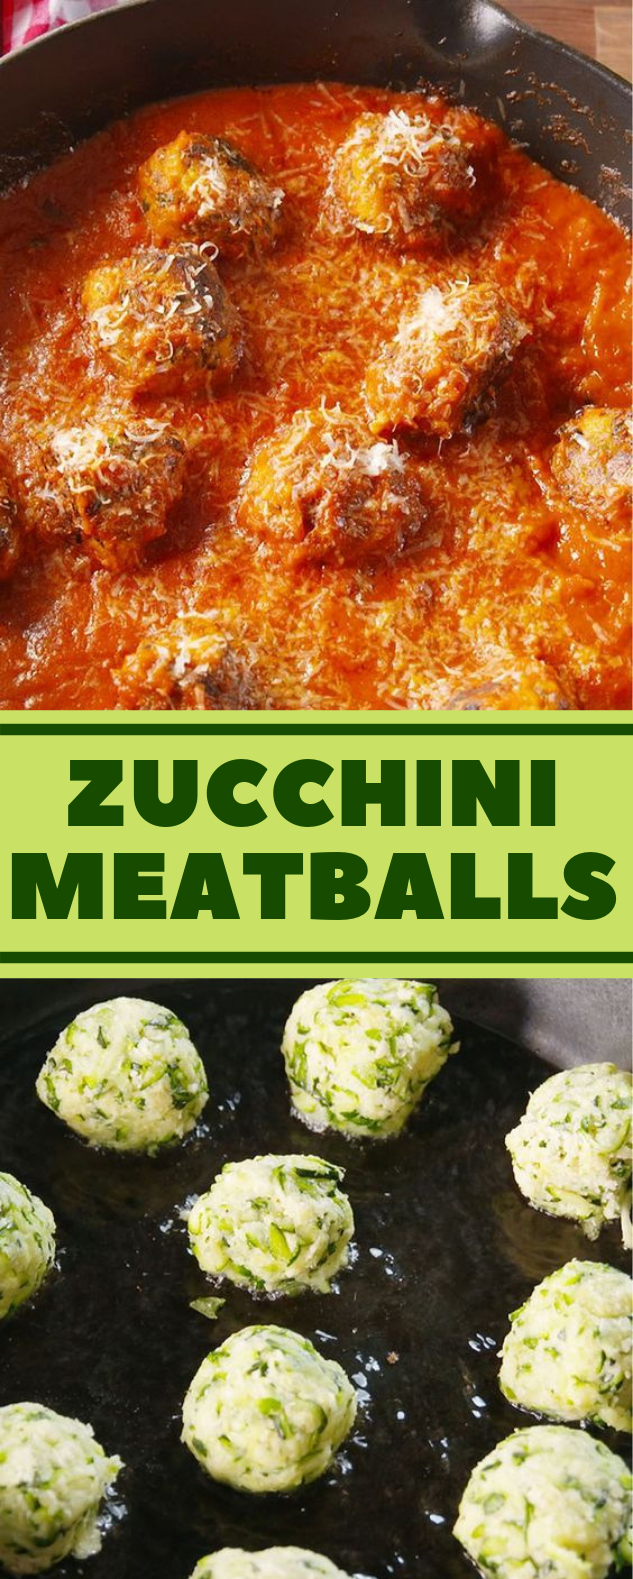 Zucchini "Meatballs" #vegetarian #healthydinner